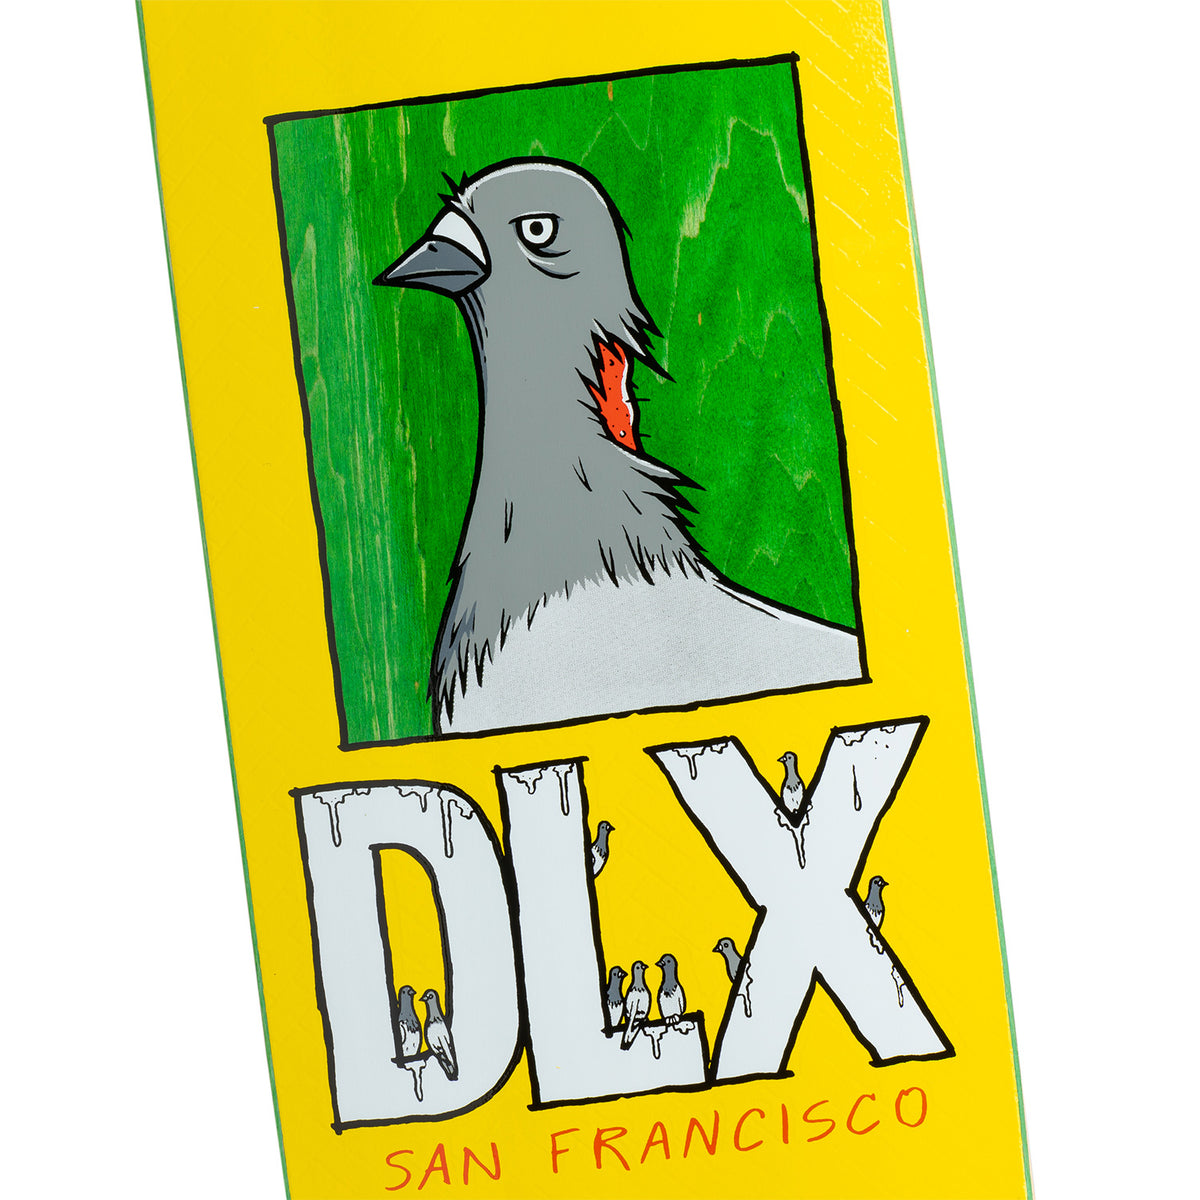 DLX X Todd Francis Pigeon Deck